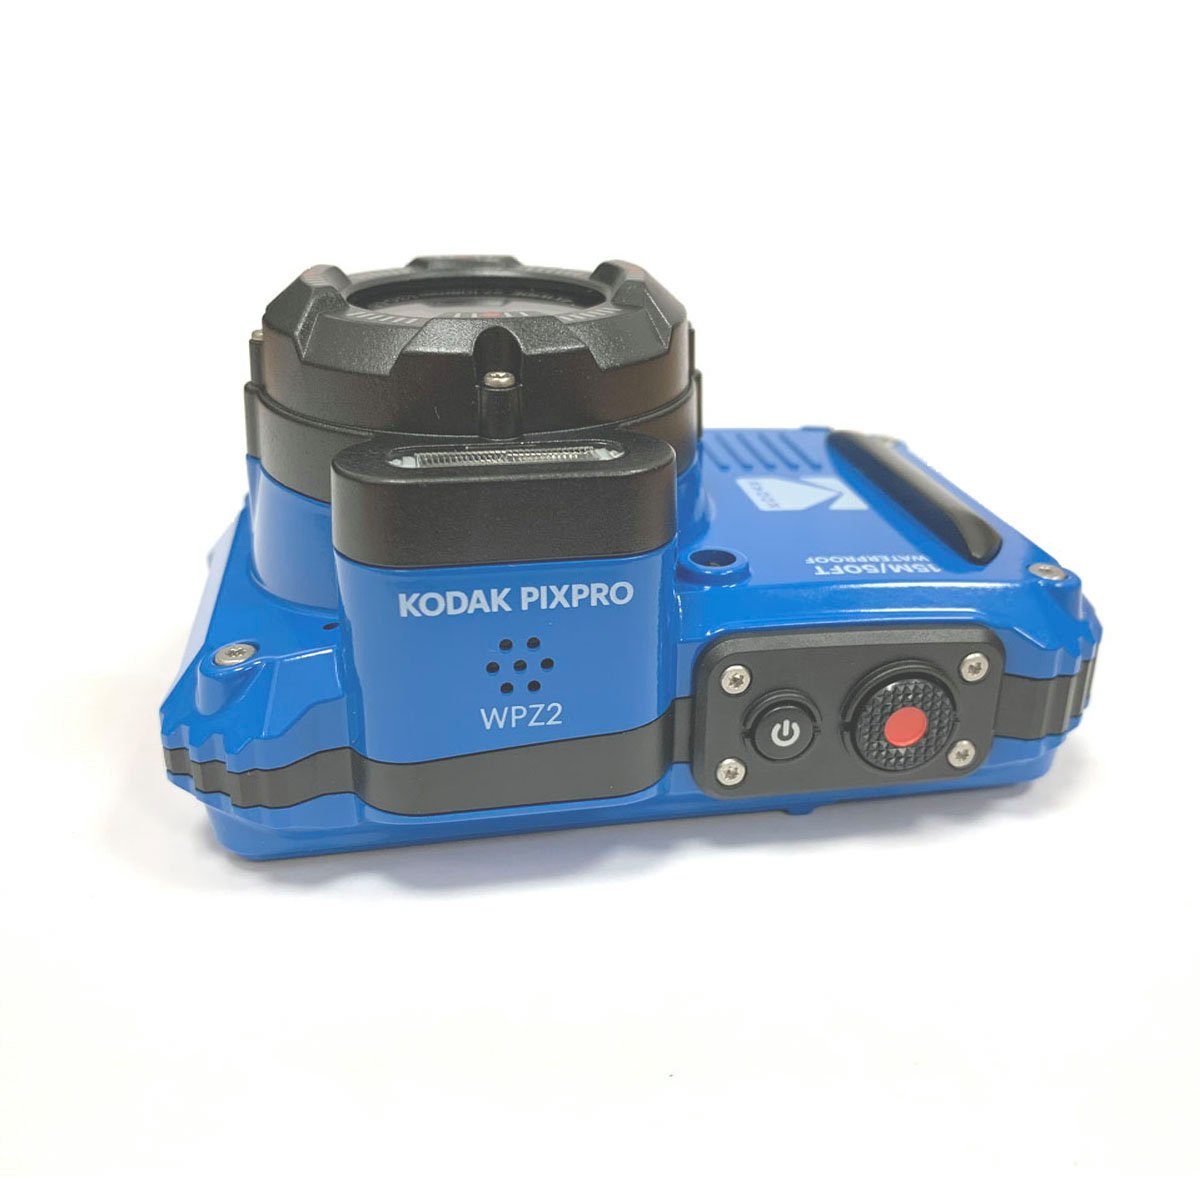 WPZ2 PixPro Digitalkamera blau Kodak Kompaktkamera